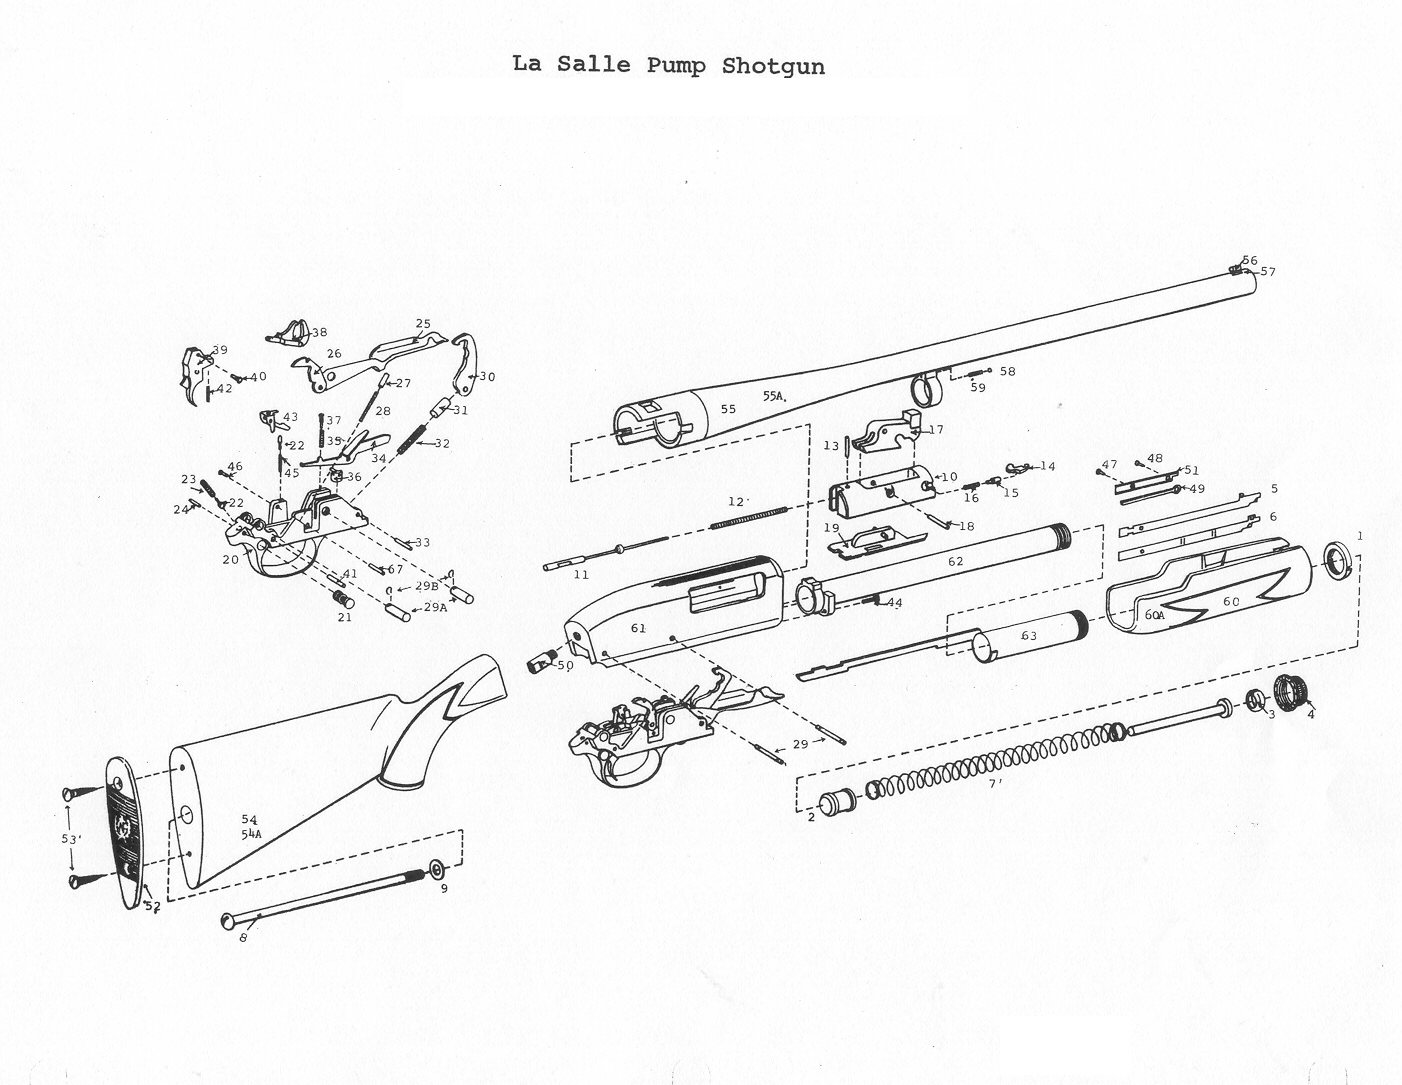 Parts Of A Pump Action Shotgun